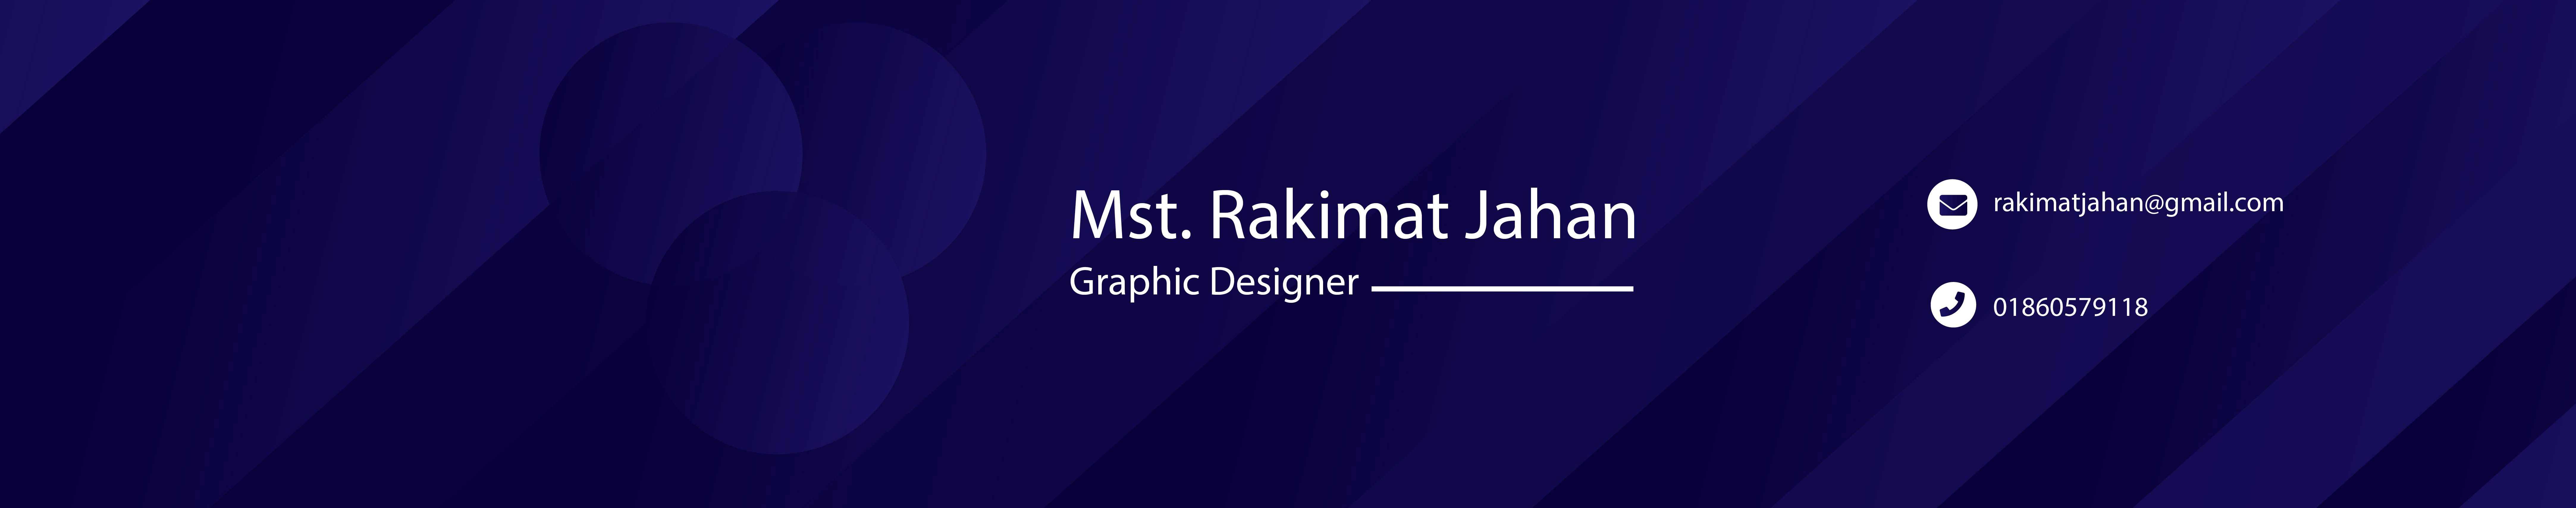 Profil-Banner von Mst. Rakimat Jahan